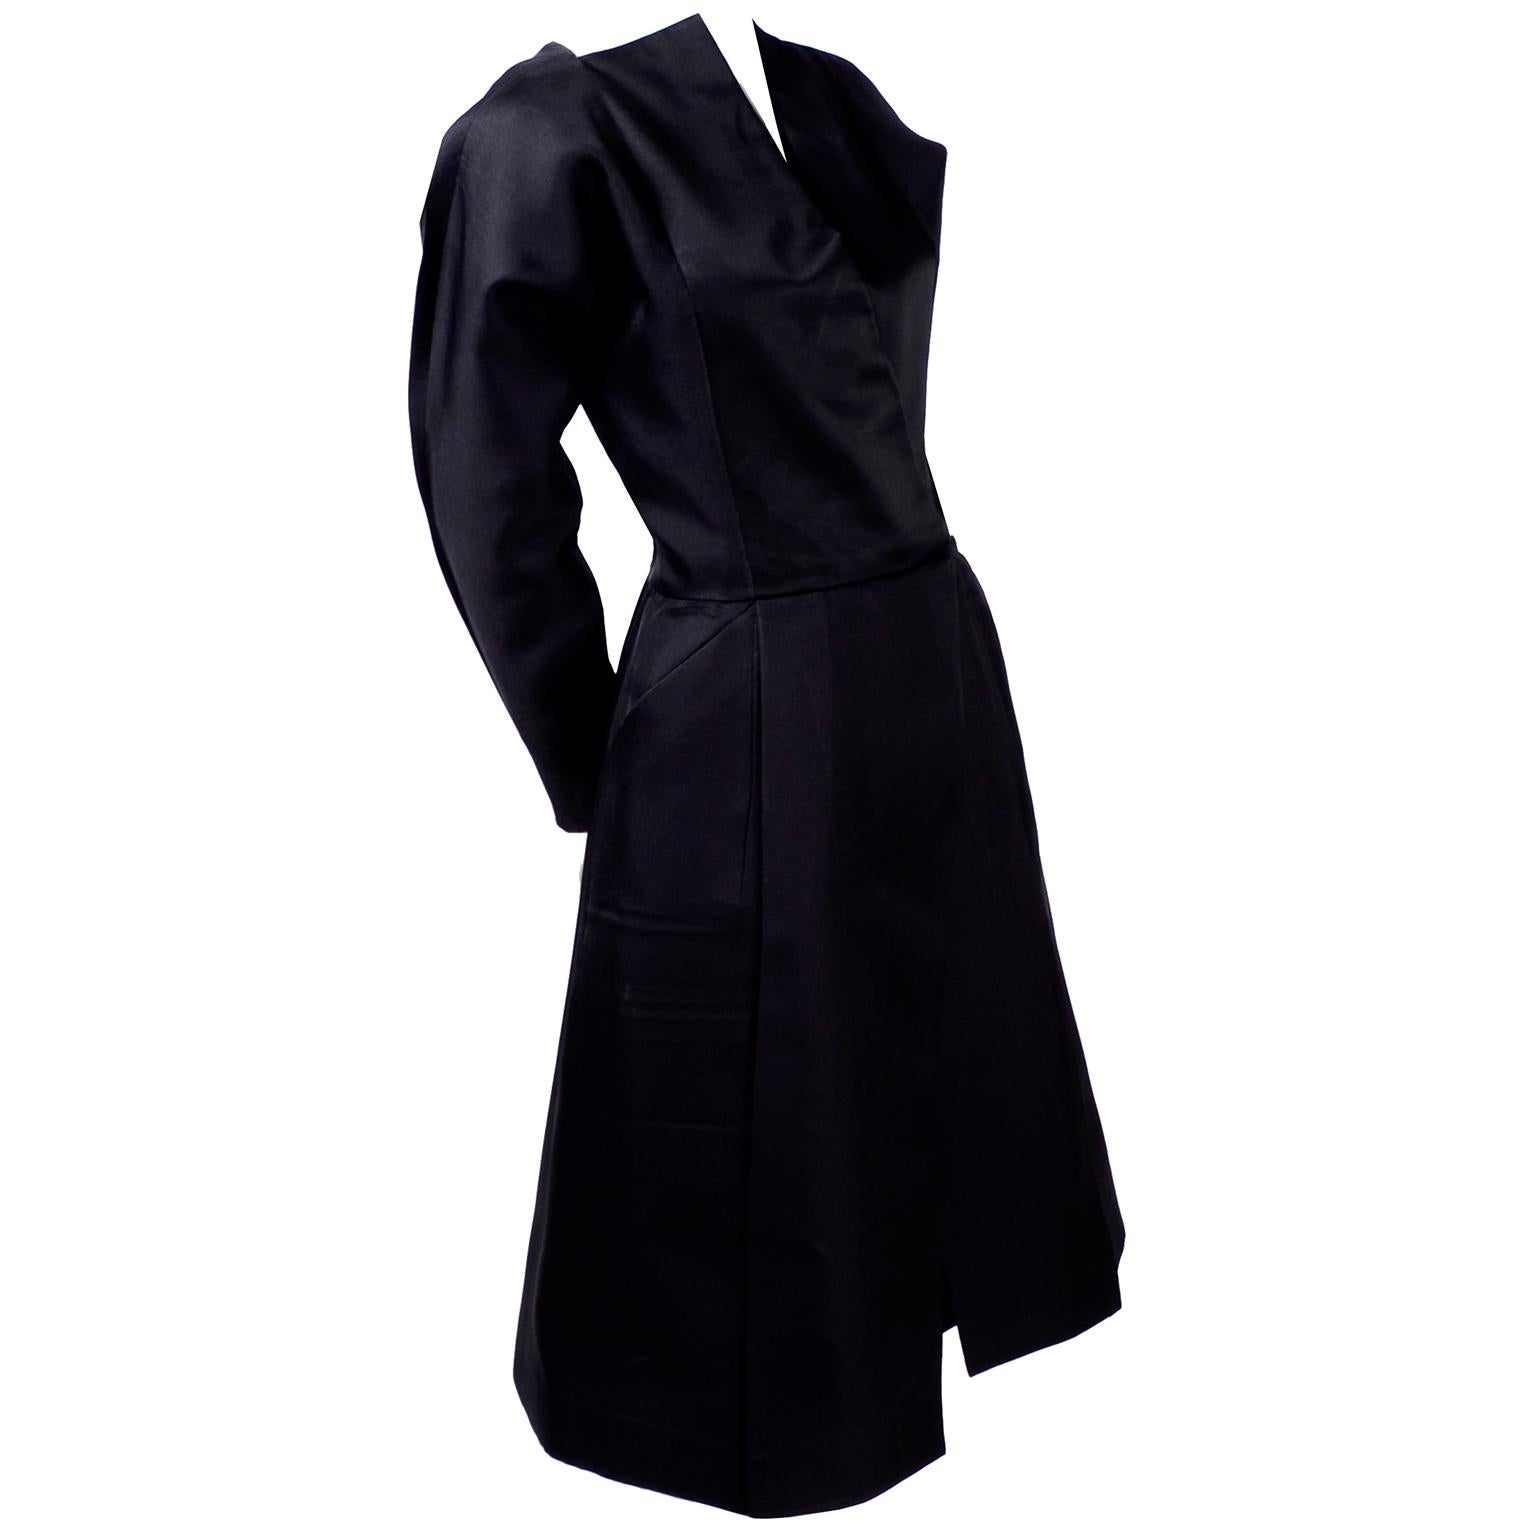 Vintage Black Geoffrey Beene Dress W/ Detailed Origami Folds & Styling